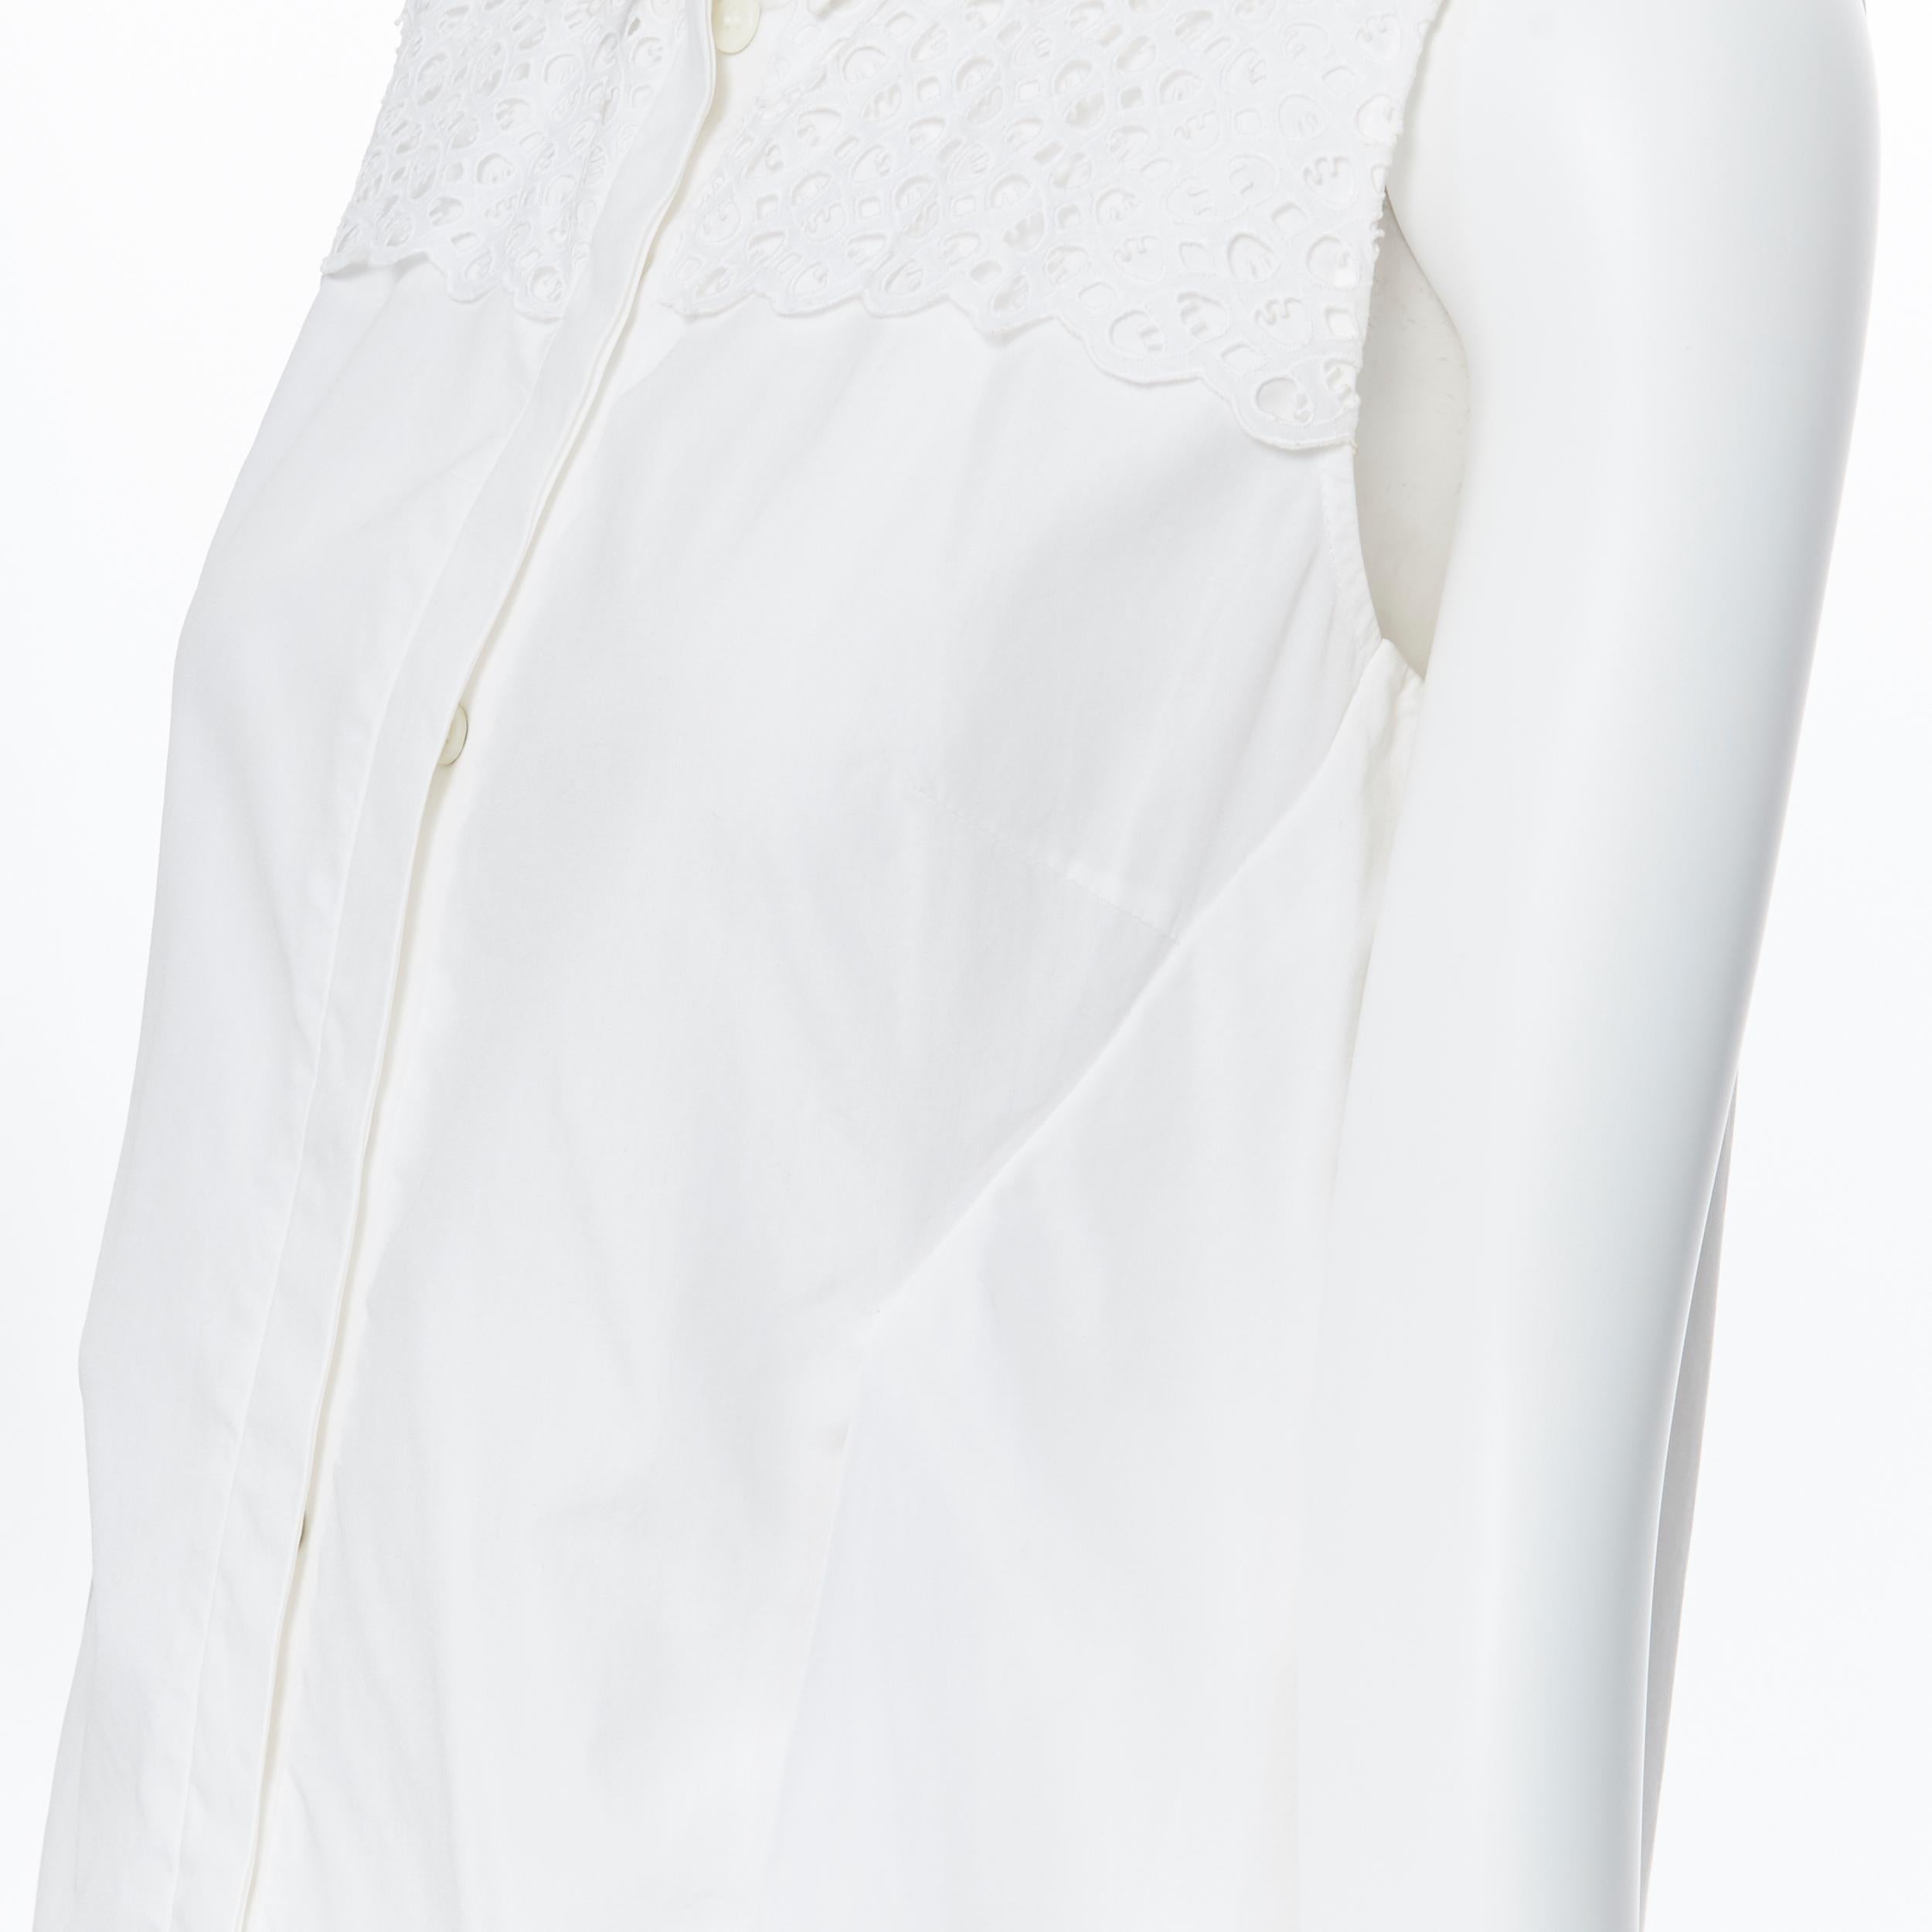 PETER PILOTTO white cotton embroidery anglais paneled panel sleeveless shirt S 2